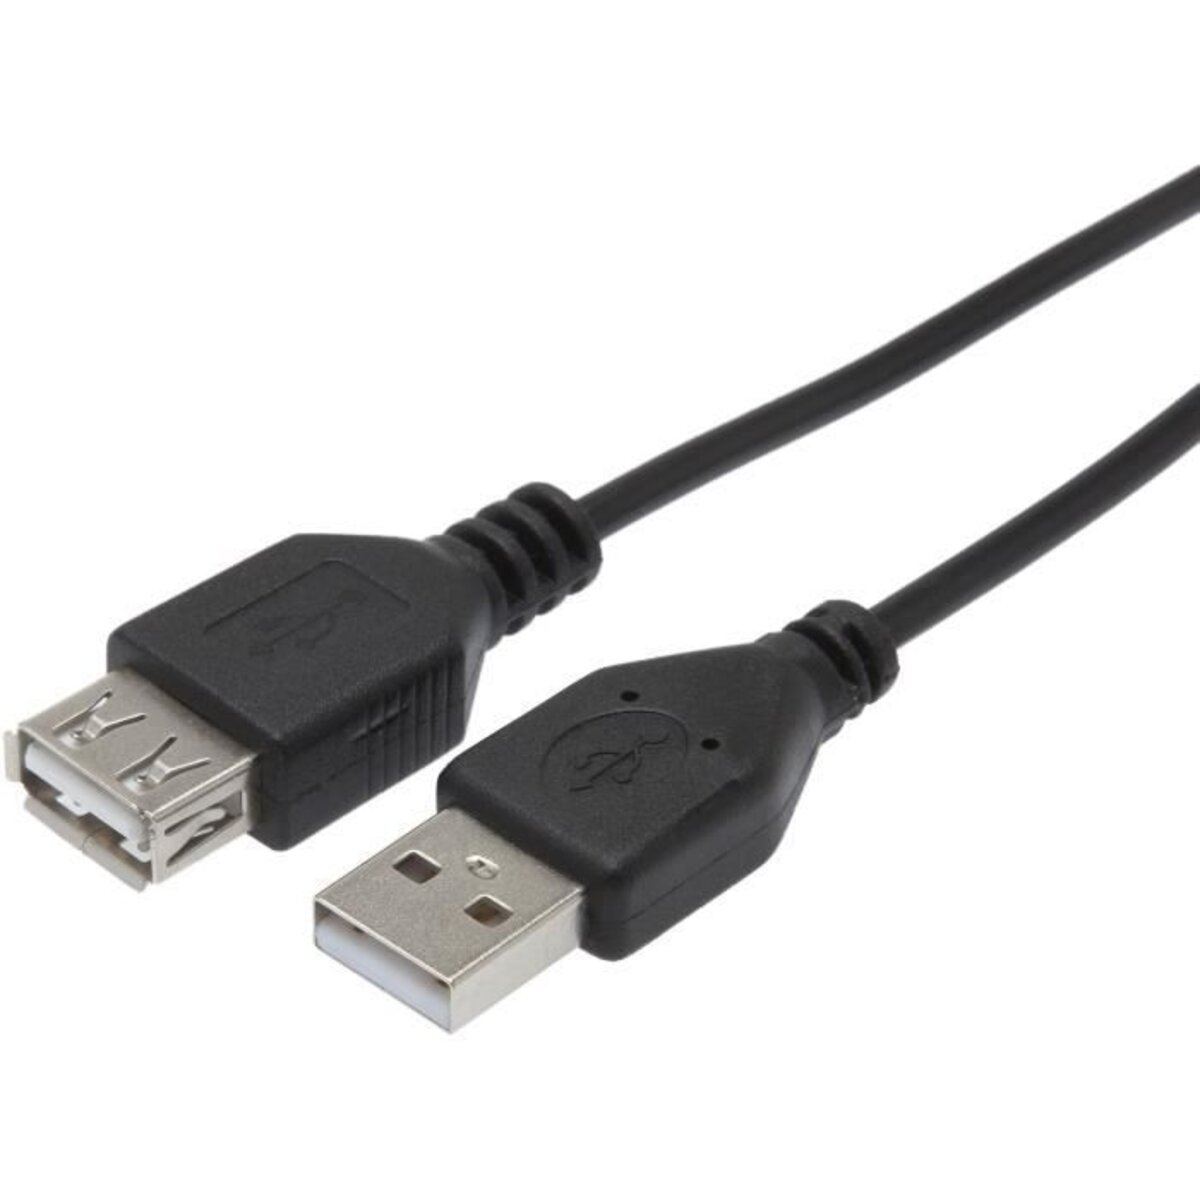 RALLONGE USB 2.0 USB-A/USB-A MÂLE/FEMELLE NOIR 1,8M